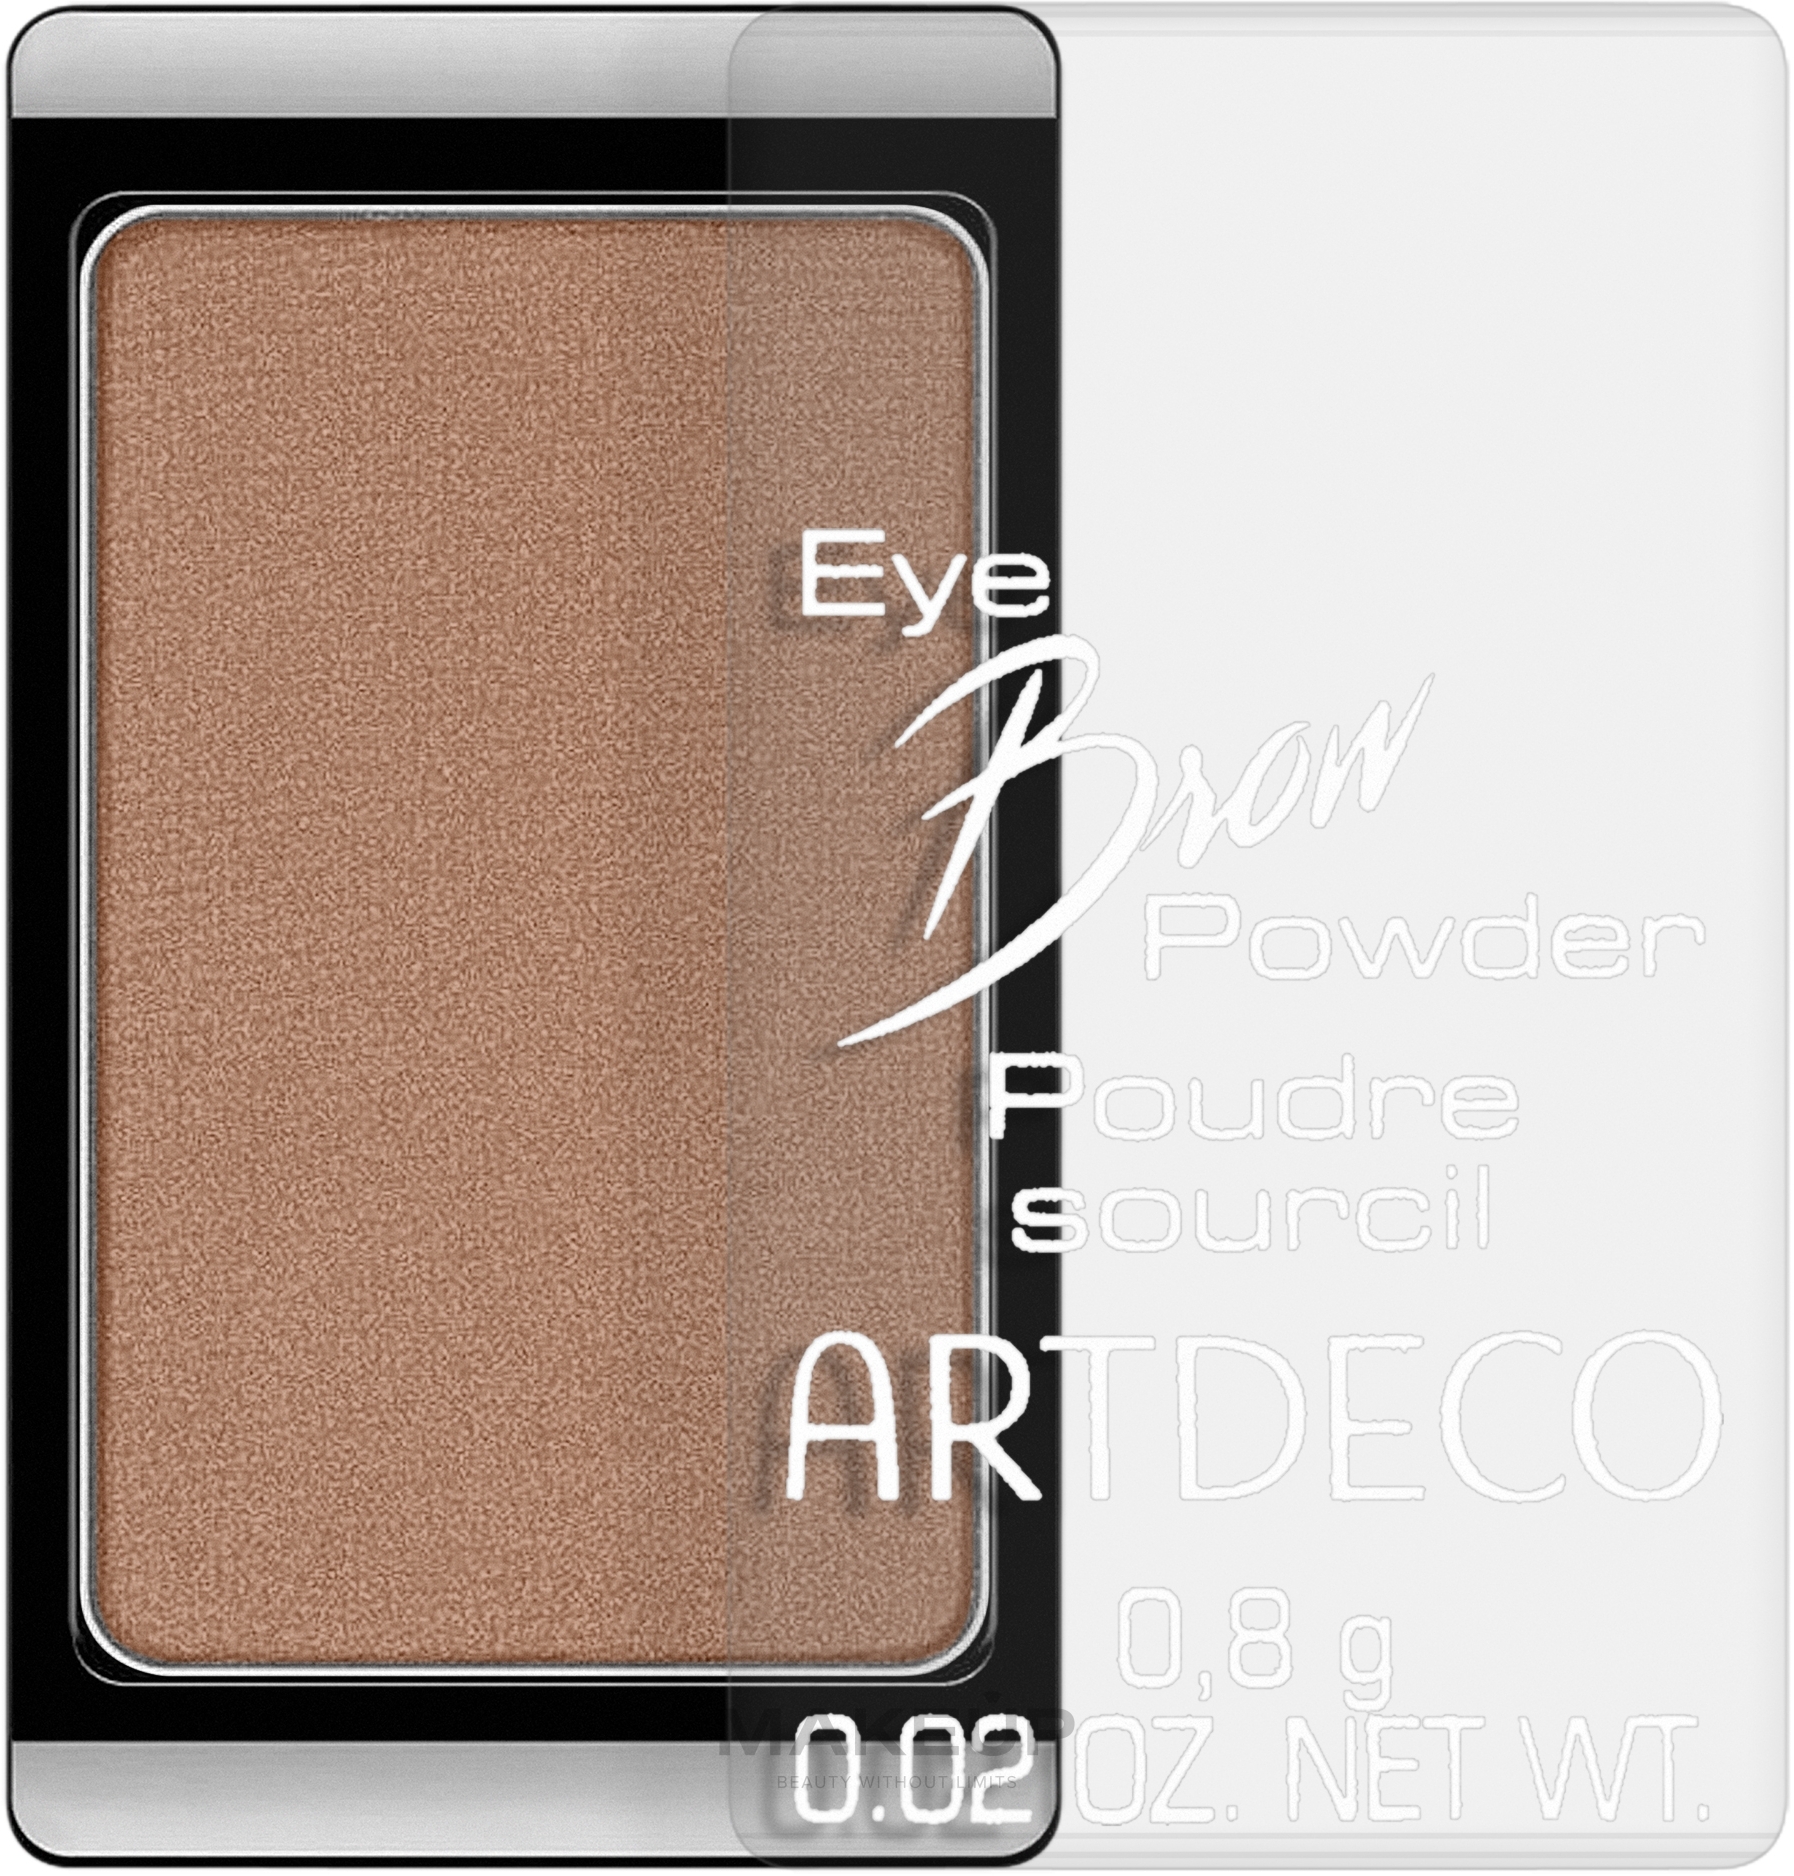 Augenbrauenpuder - Artdeco Eye Brow Powder — Foto 04 - Soft Taupe